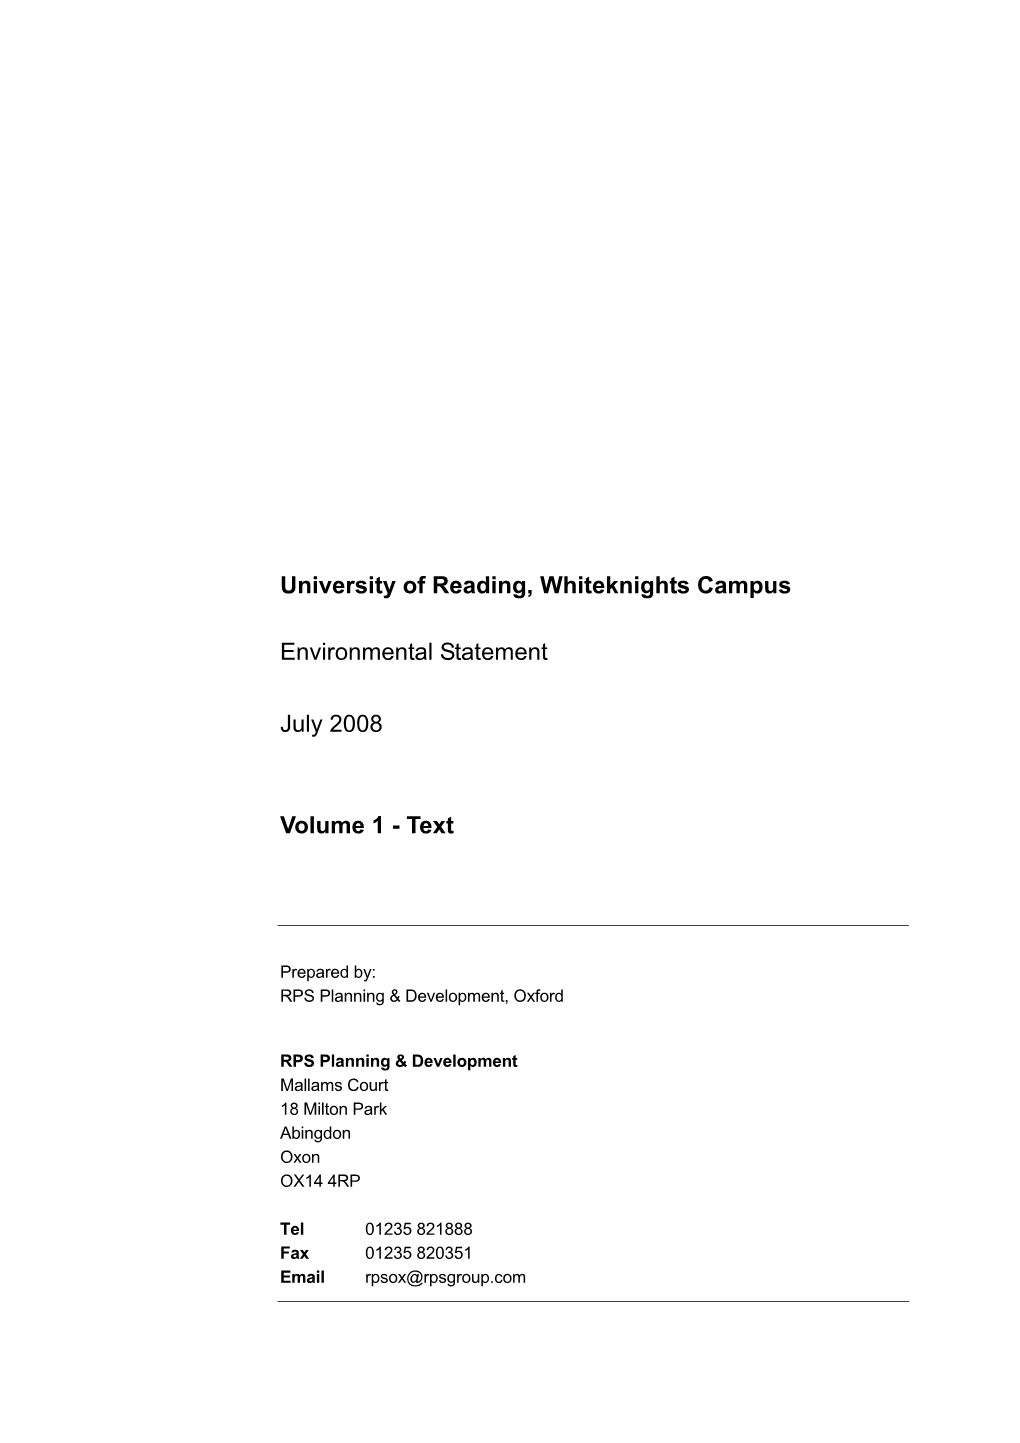 University of Reading, Whiteknights Campus Environmental Statement